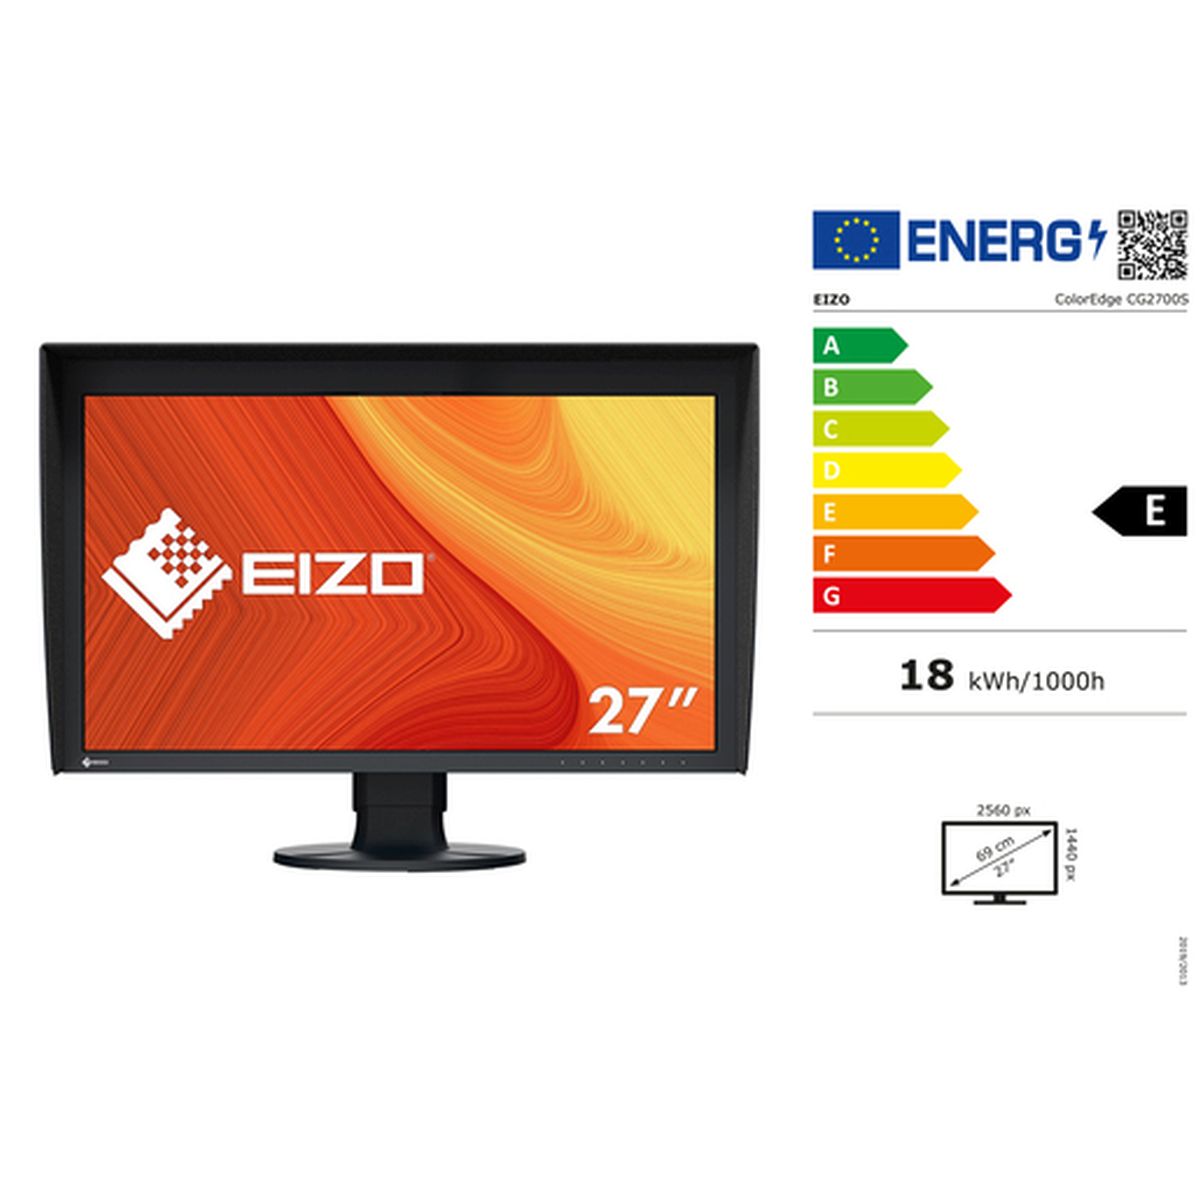 Eizo CG2700S ColorEdge 68,5 cm (27") sw Grafikmonitor mit Lichtschutzblende